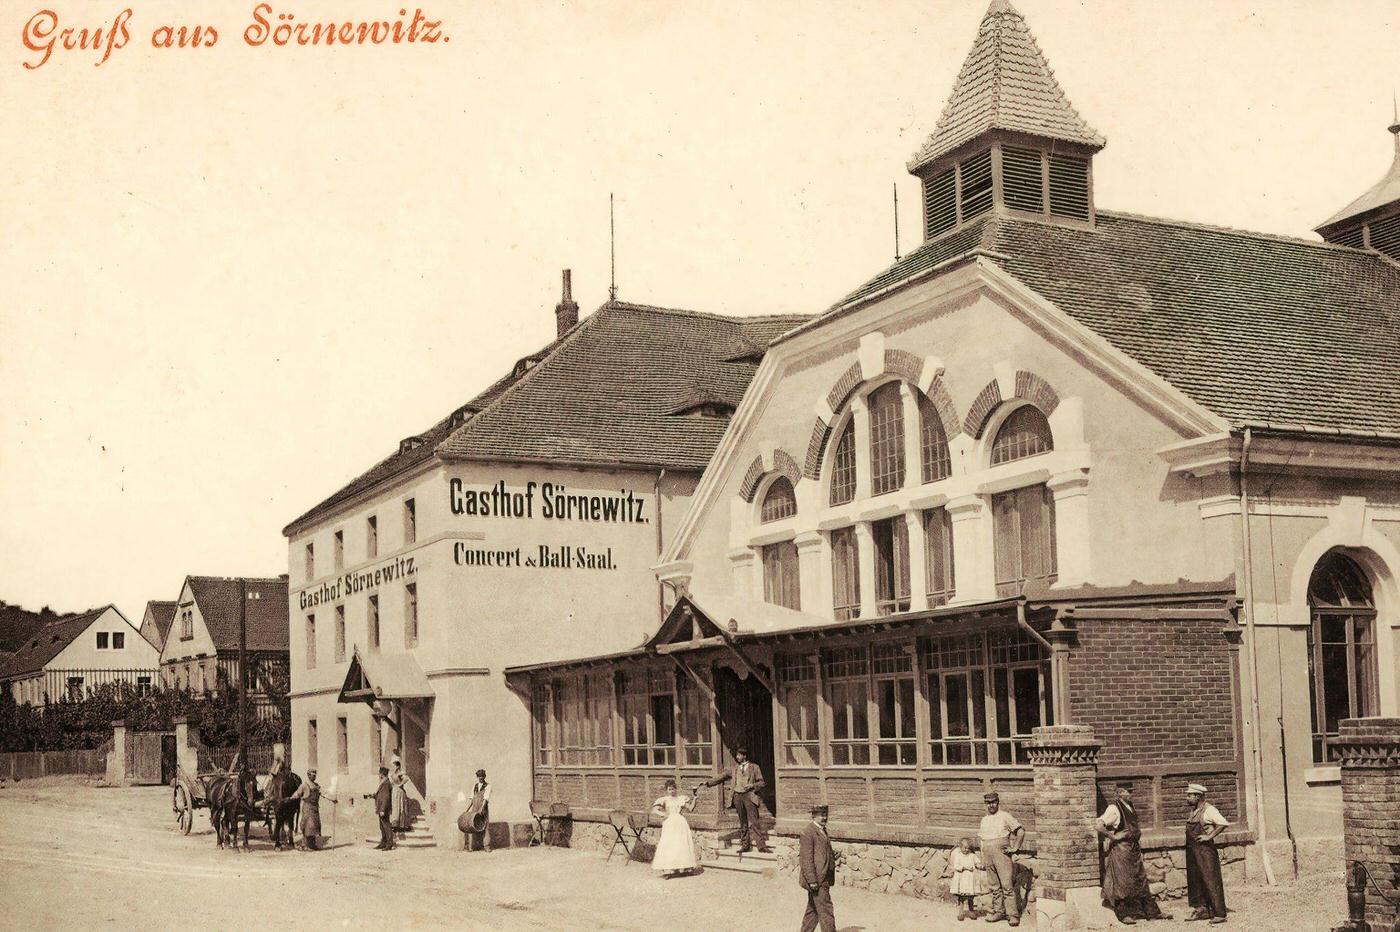 Restaurants in Landkreis Meissen, Sornewitz (Coswig), 1898.